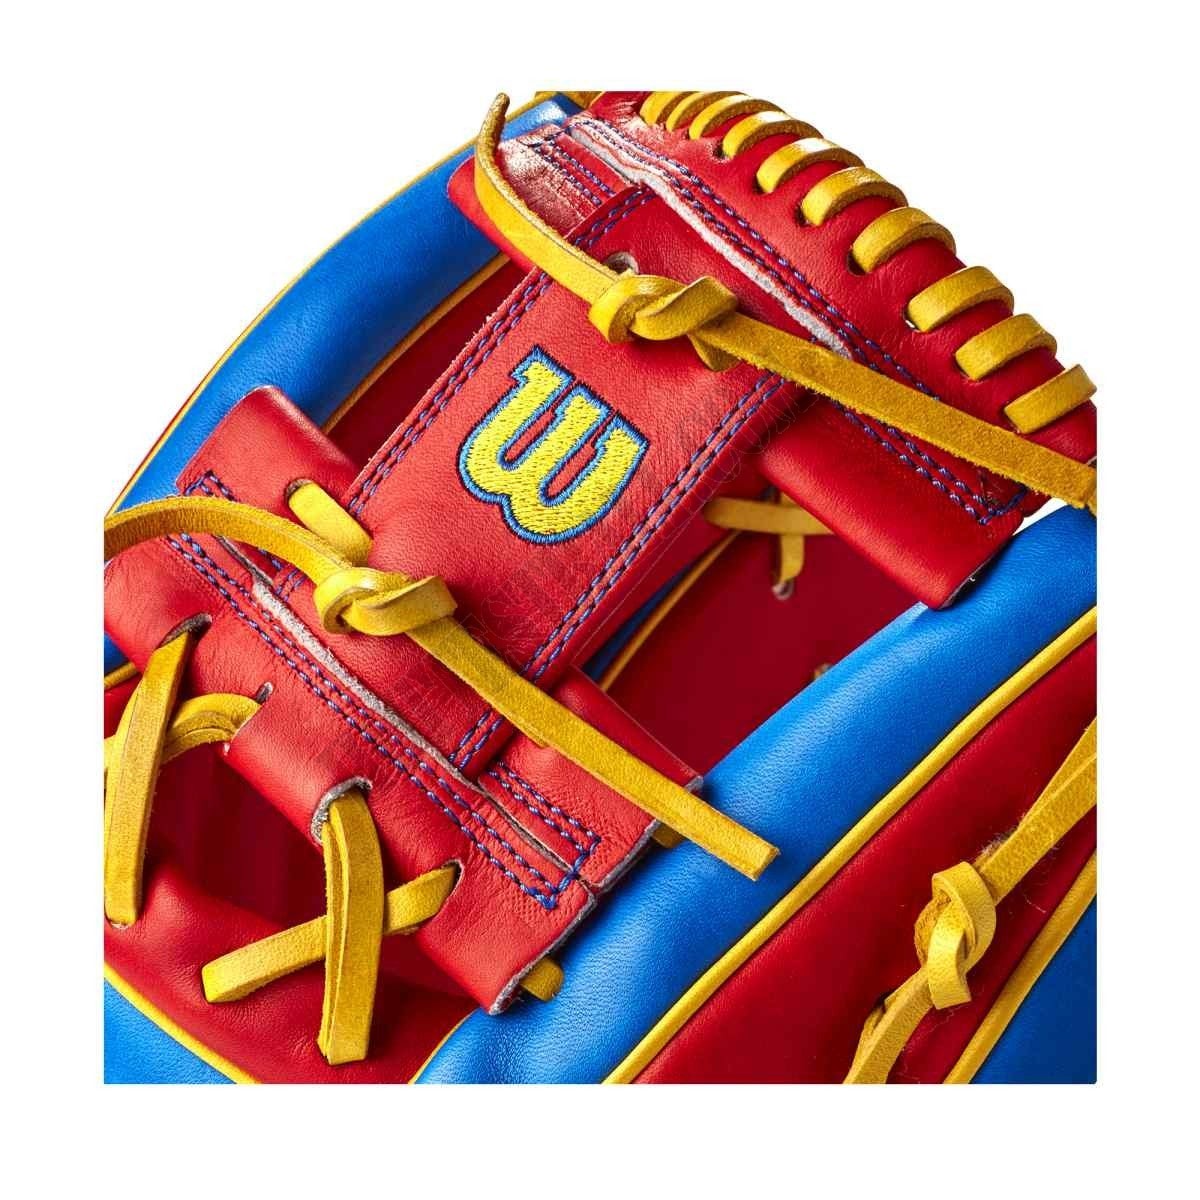 2021 A2000 1786 Venezuela 11.5" Infield Baseball Glove - Limited Edition ● Wilson Promotions - -5